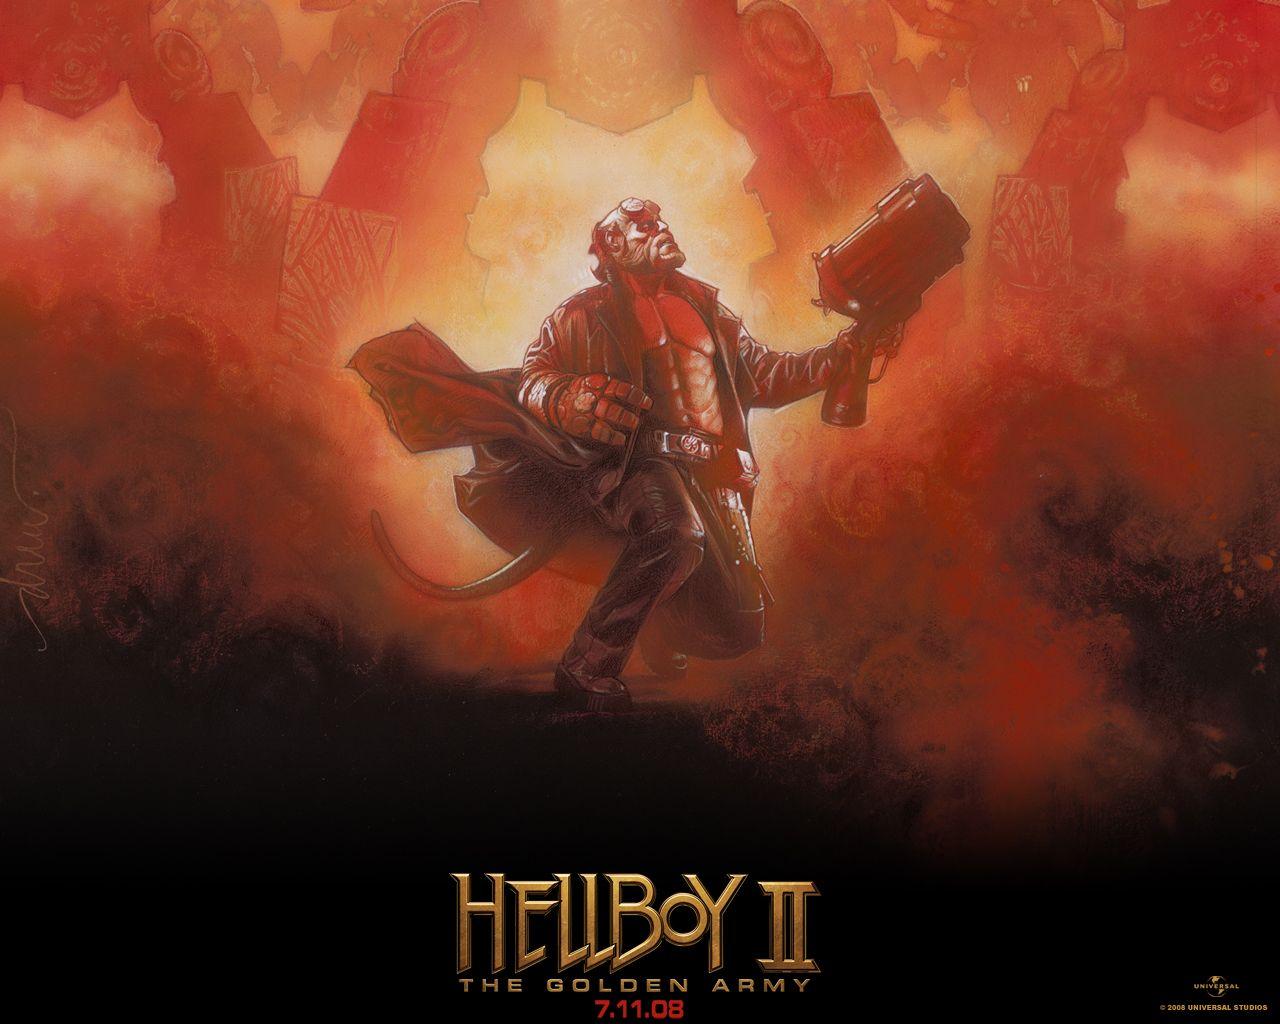 Hellboy II Wallpaper Number 2 (1280 x 1024 Pixels)